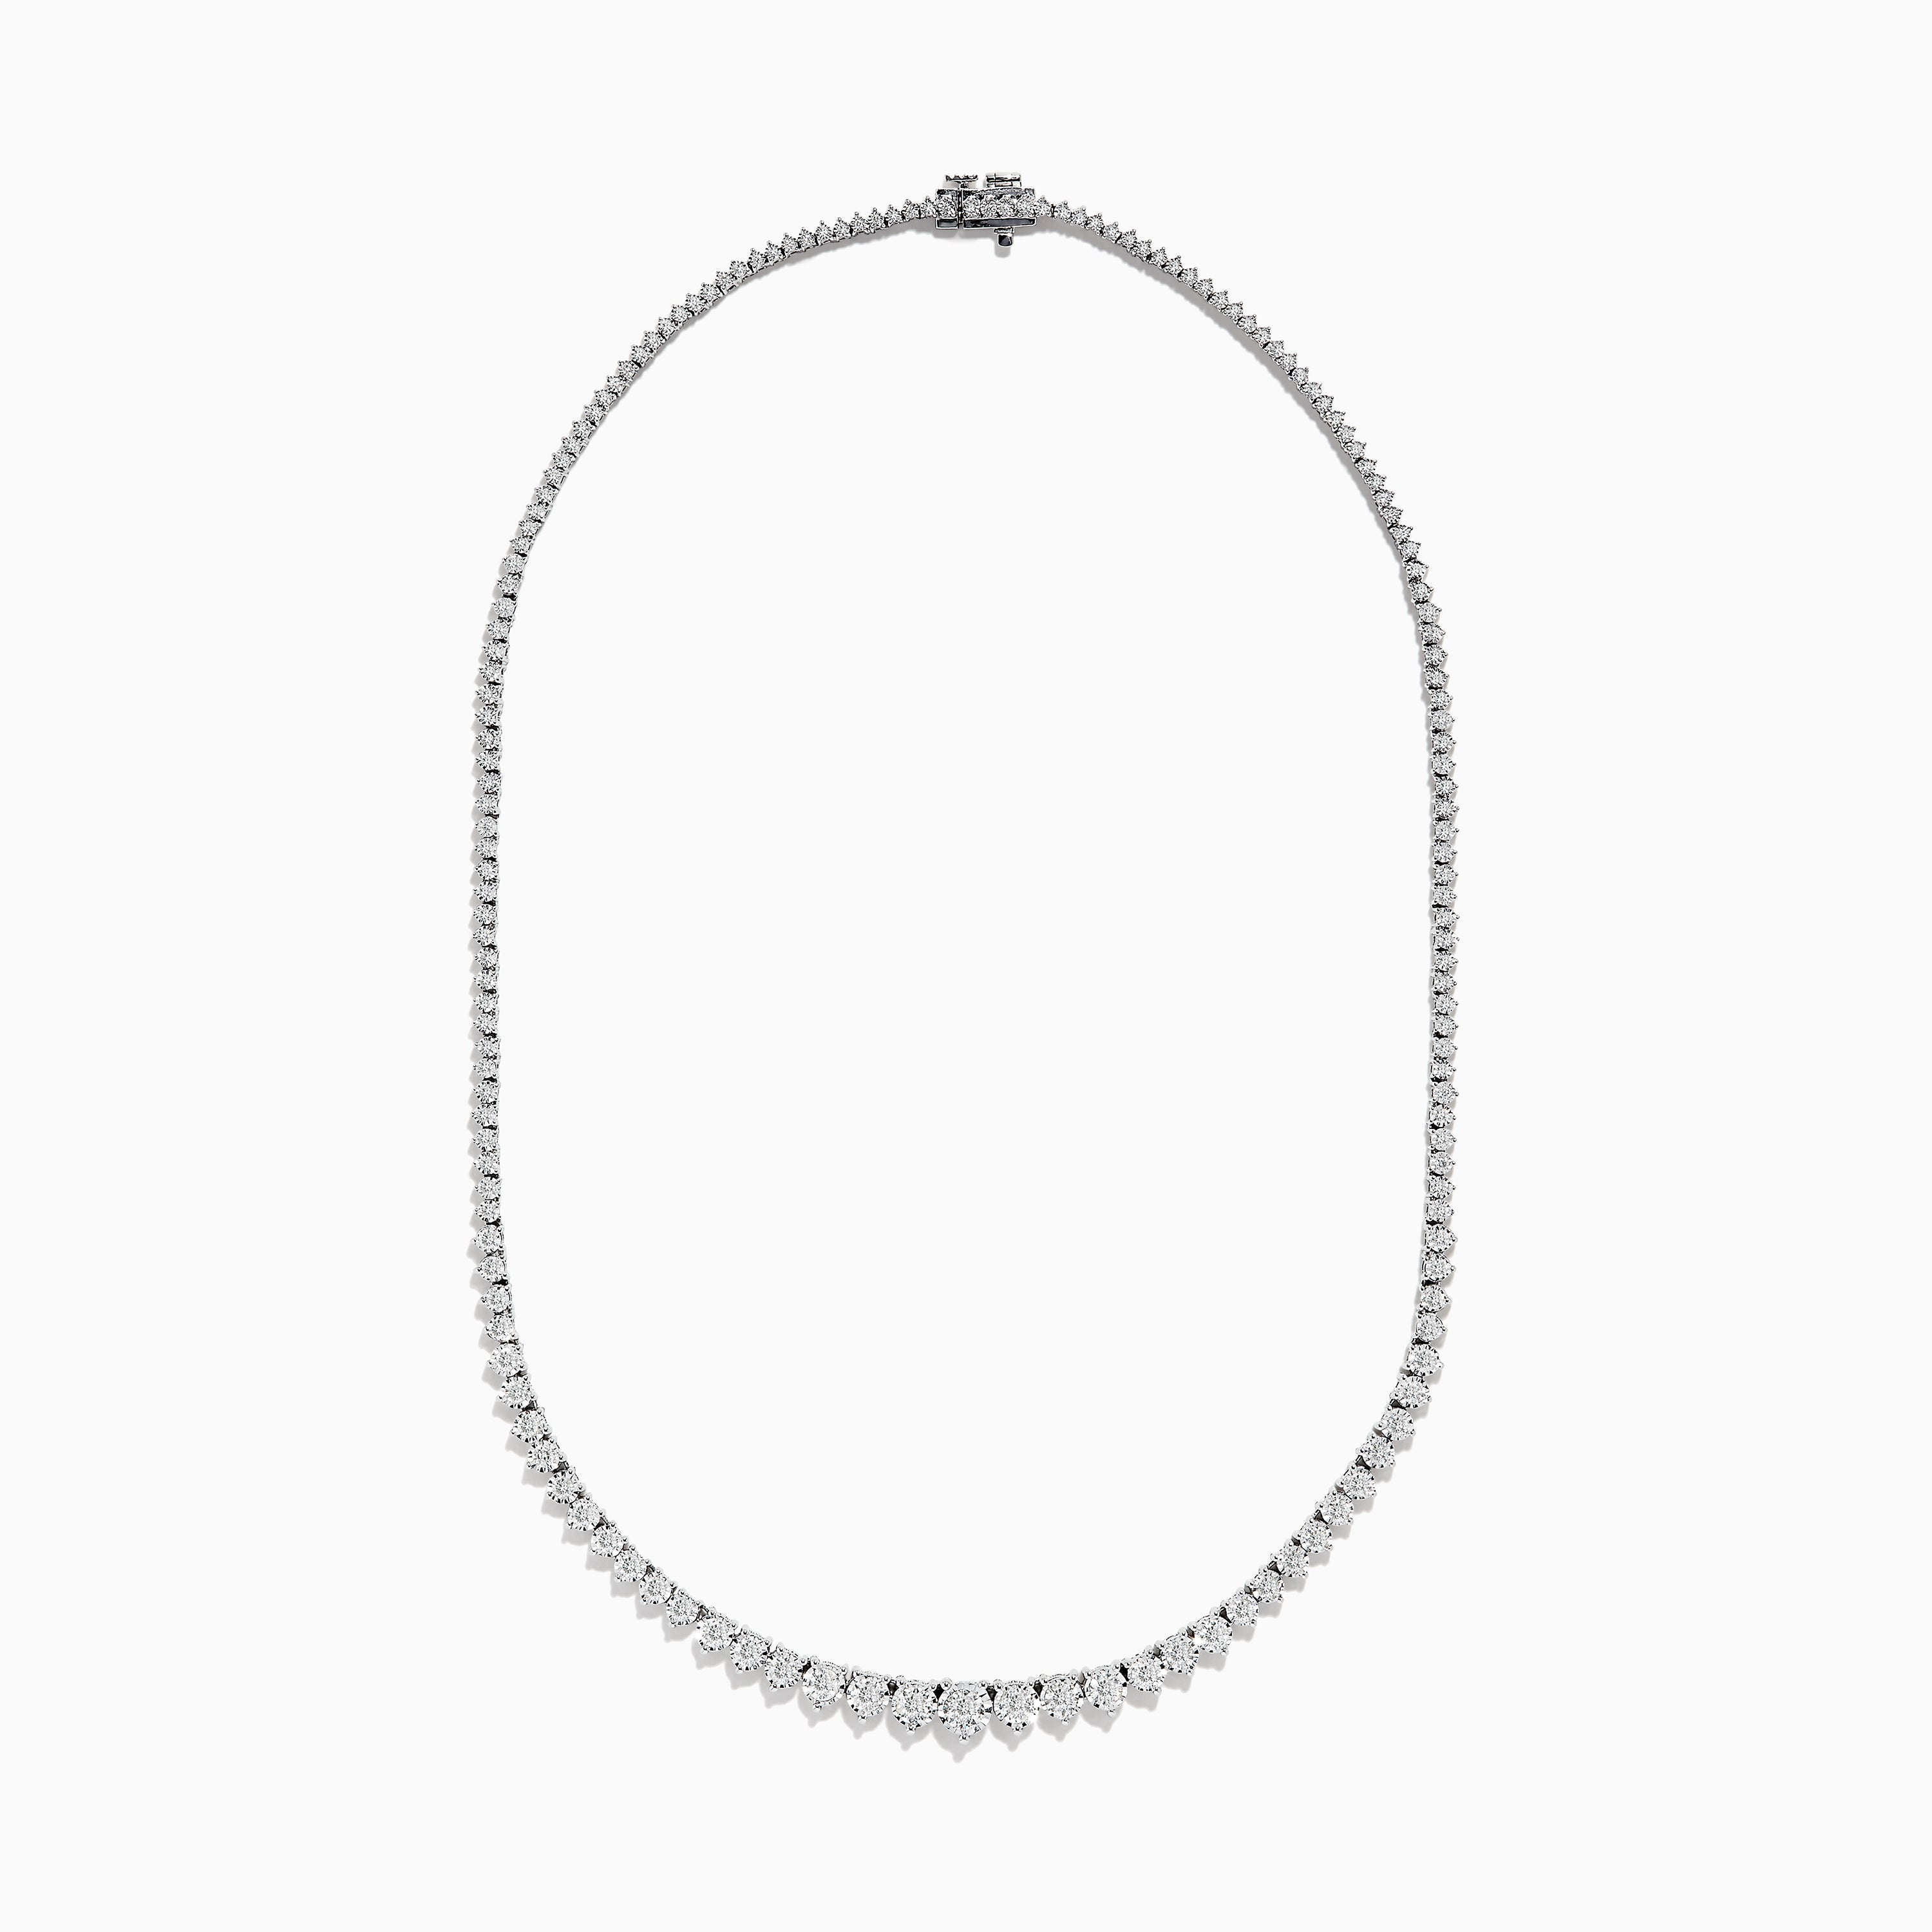 Effy Pave Classica 14K White Gold 18" Diamond Necklace, 6.98 TCW